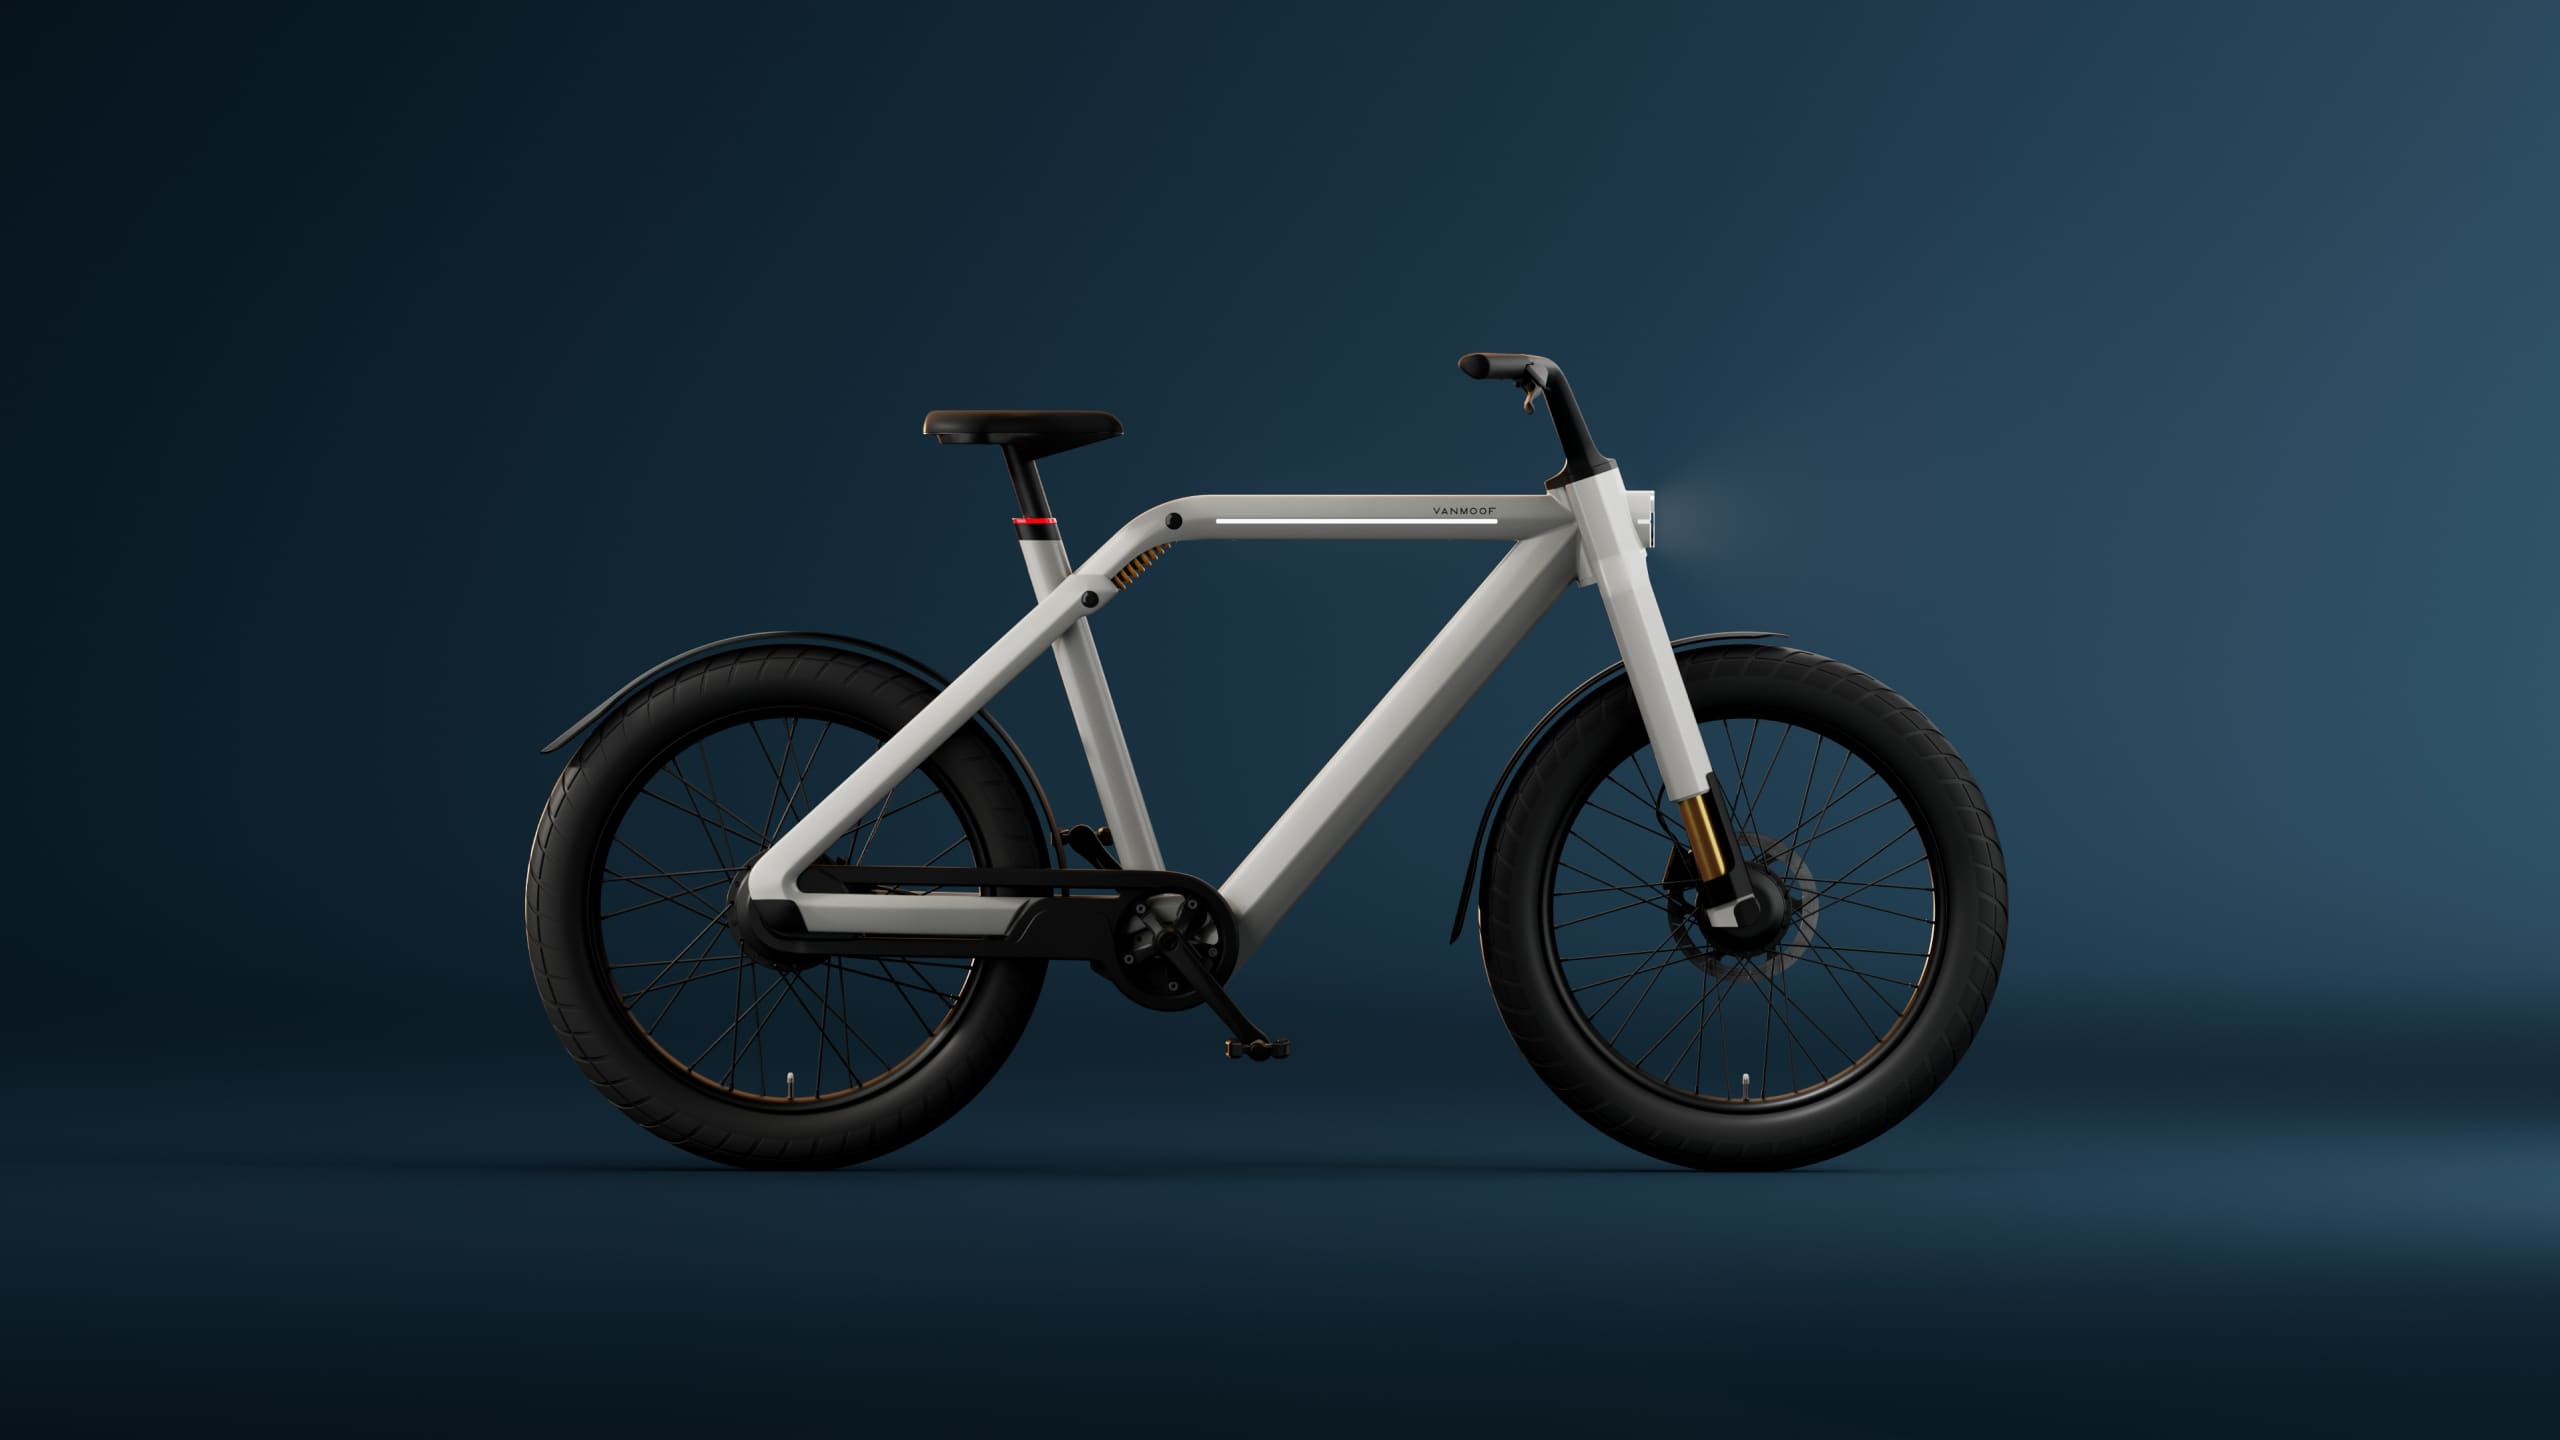 imagen 1 de VanMoof V E-Bike, una bicicleta eléctrica y veloz.